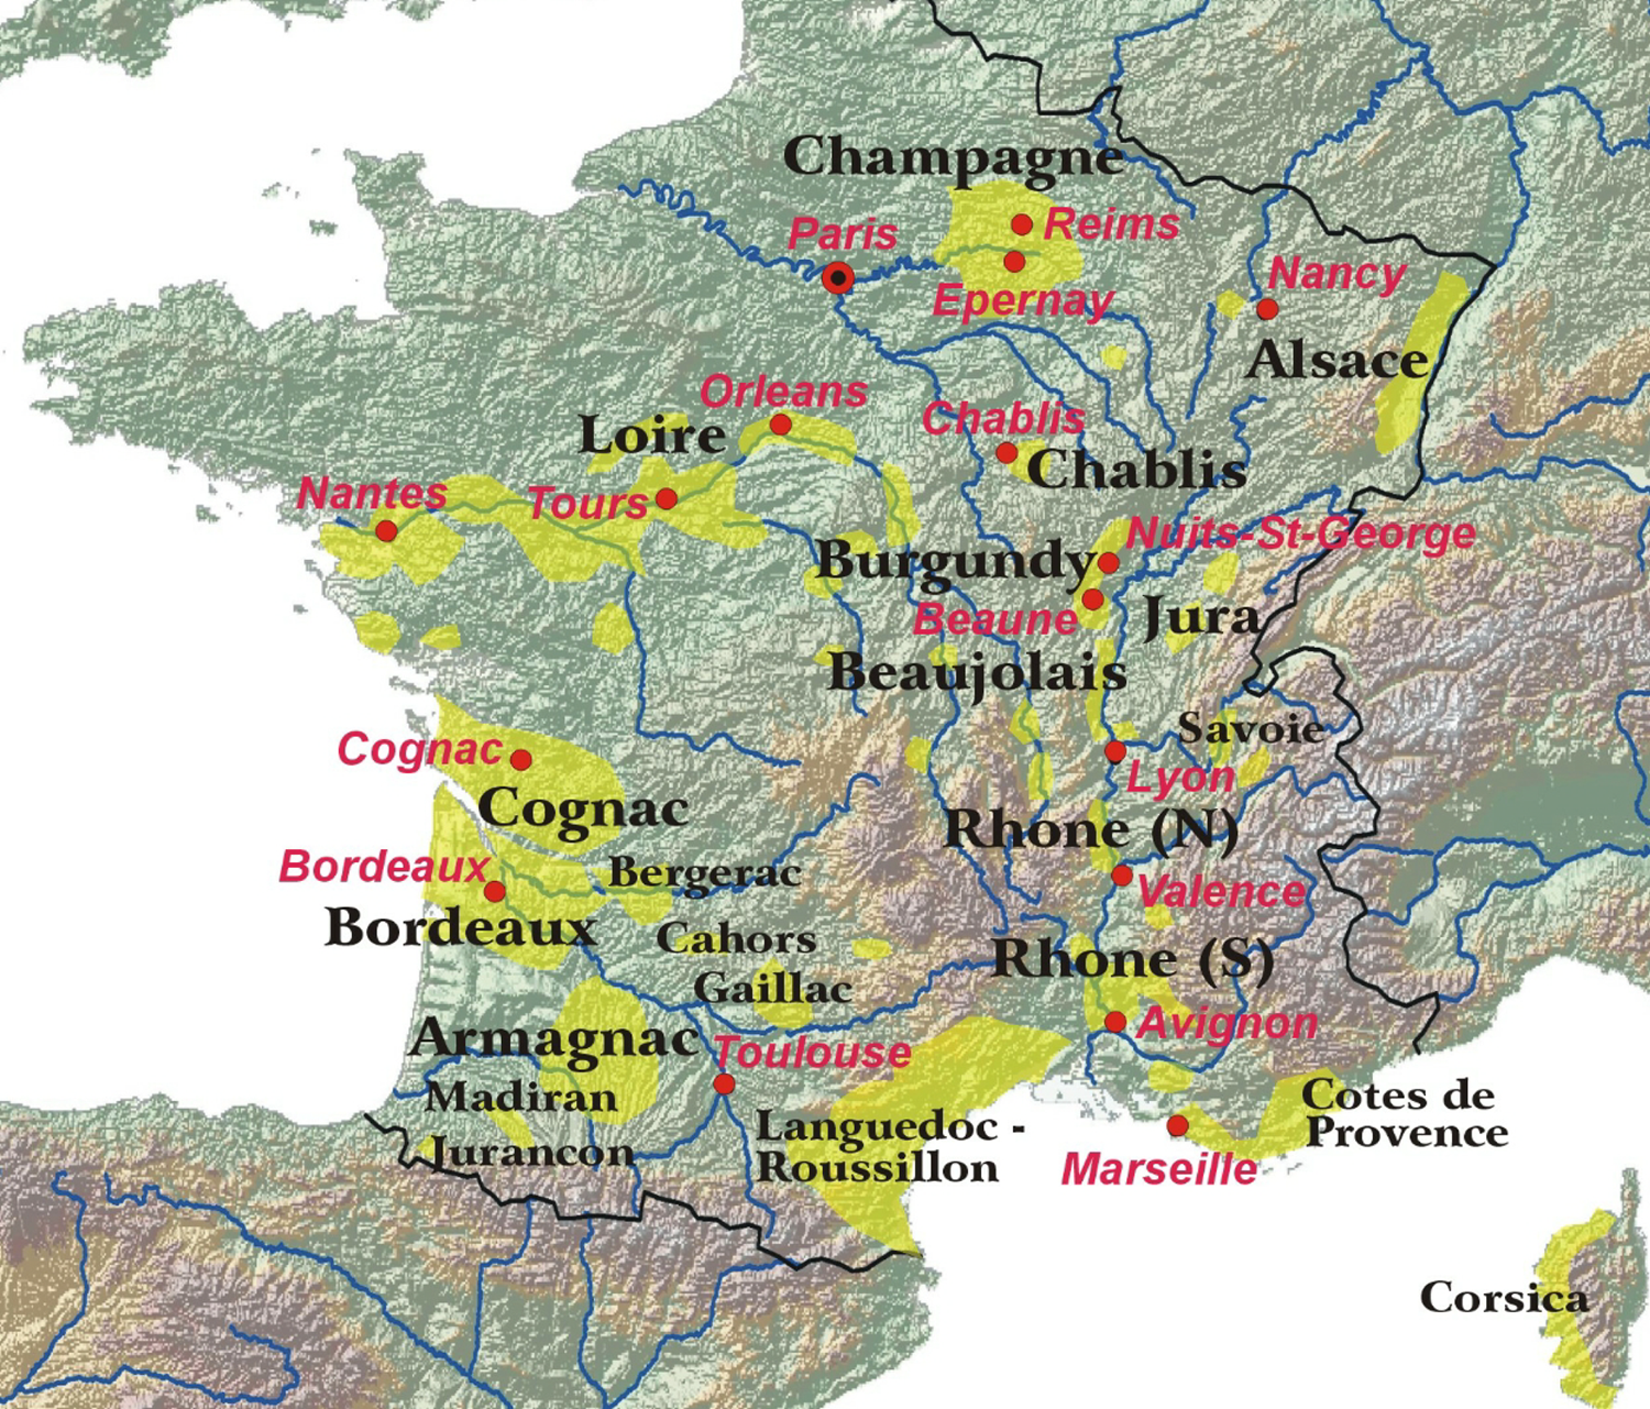 Pommard Les Bertins, Burgundy - France Wine Region